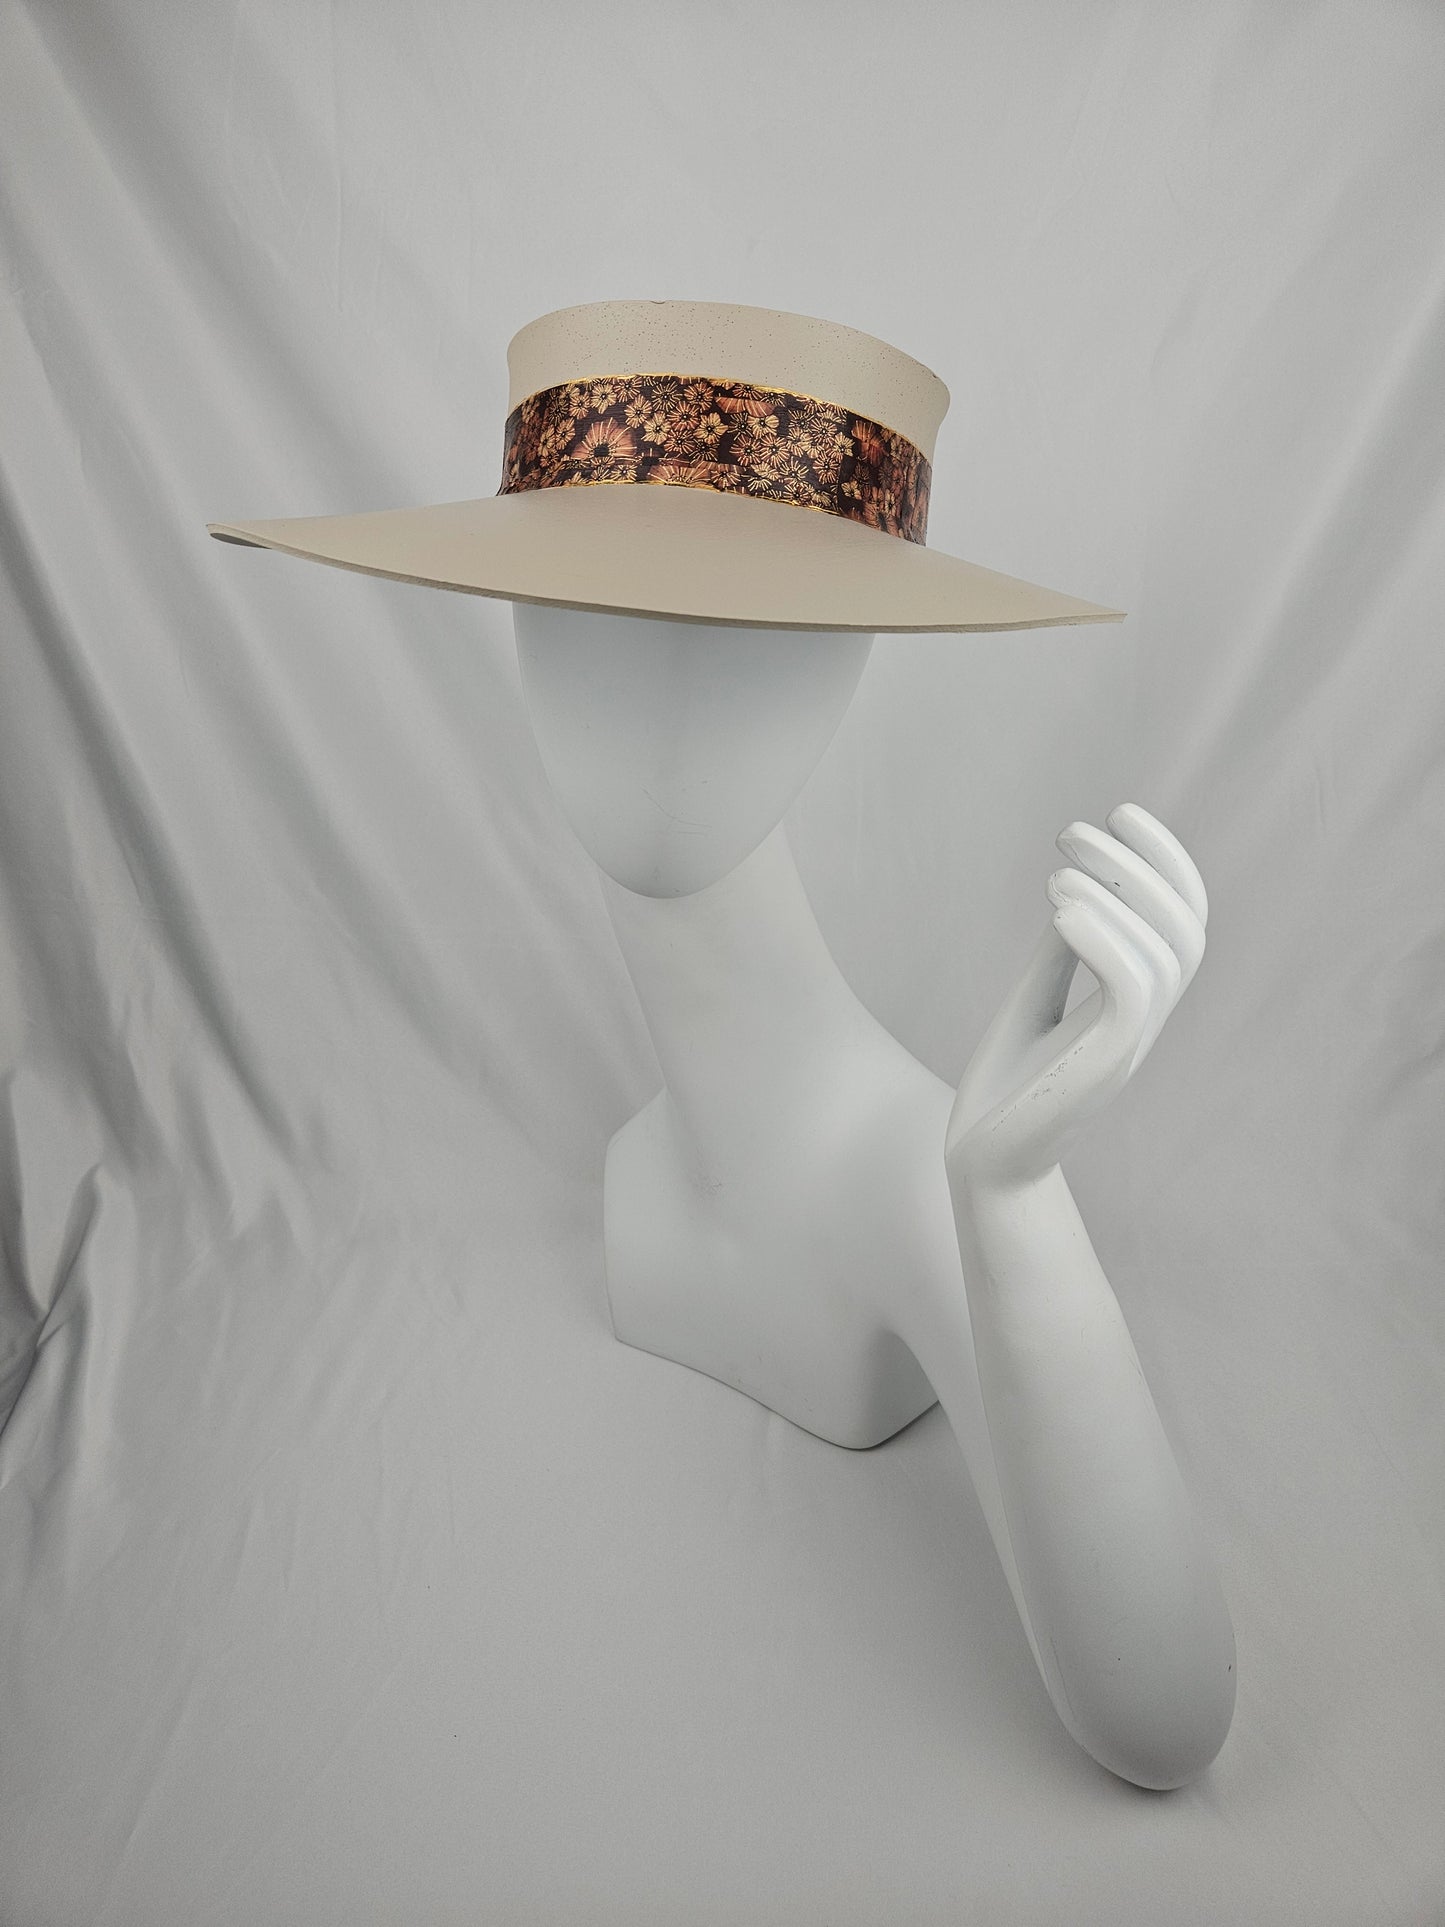 Truly Taupe Audrey Foam Sun Visor Hat with Warm Brown and Rust Floral Band: Walks, Brunch, Swim, Garden, Golf, Easter, Church, No Headache